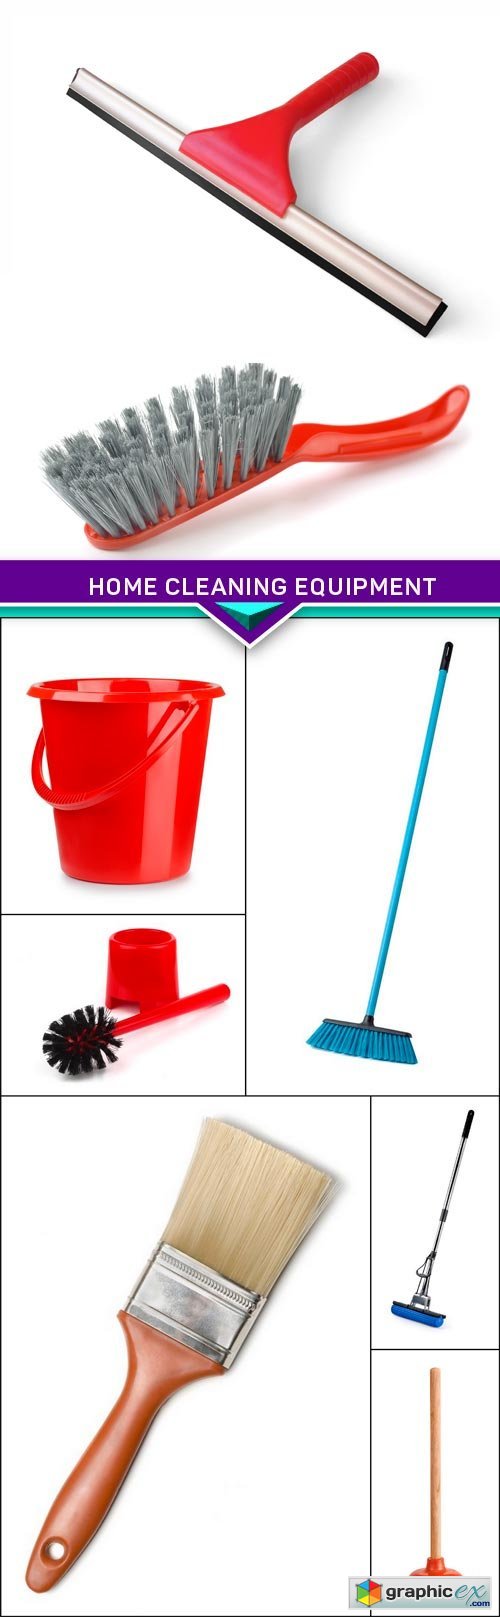 Home cleaning equipment 8X JPEG